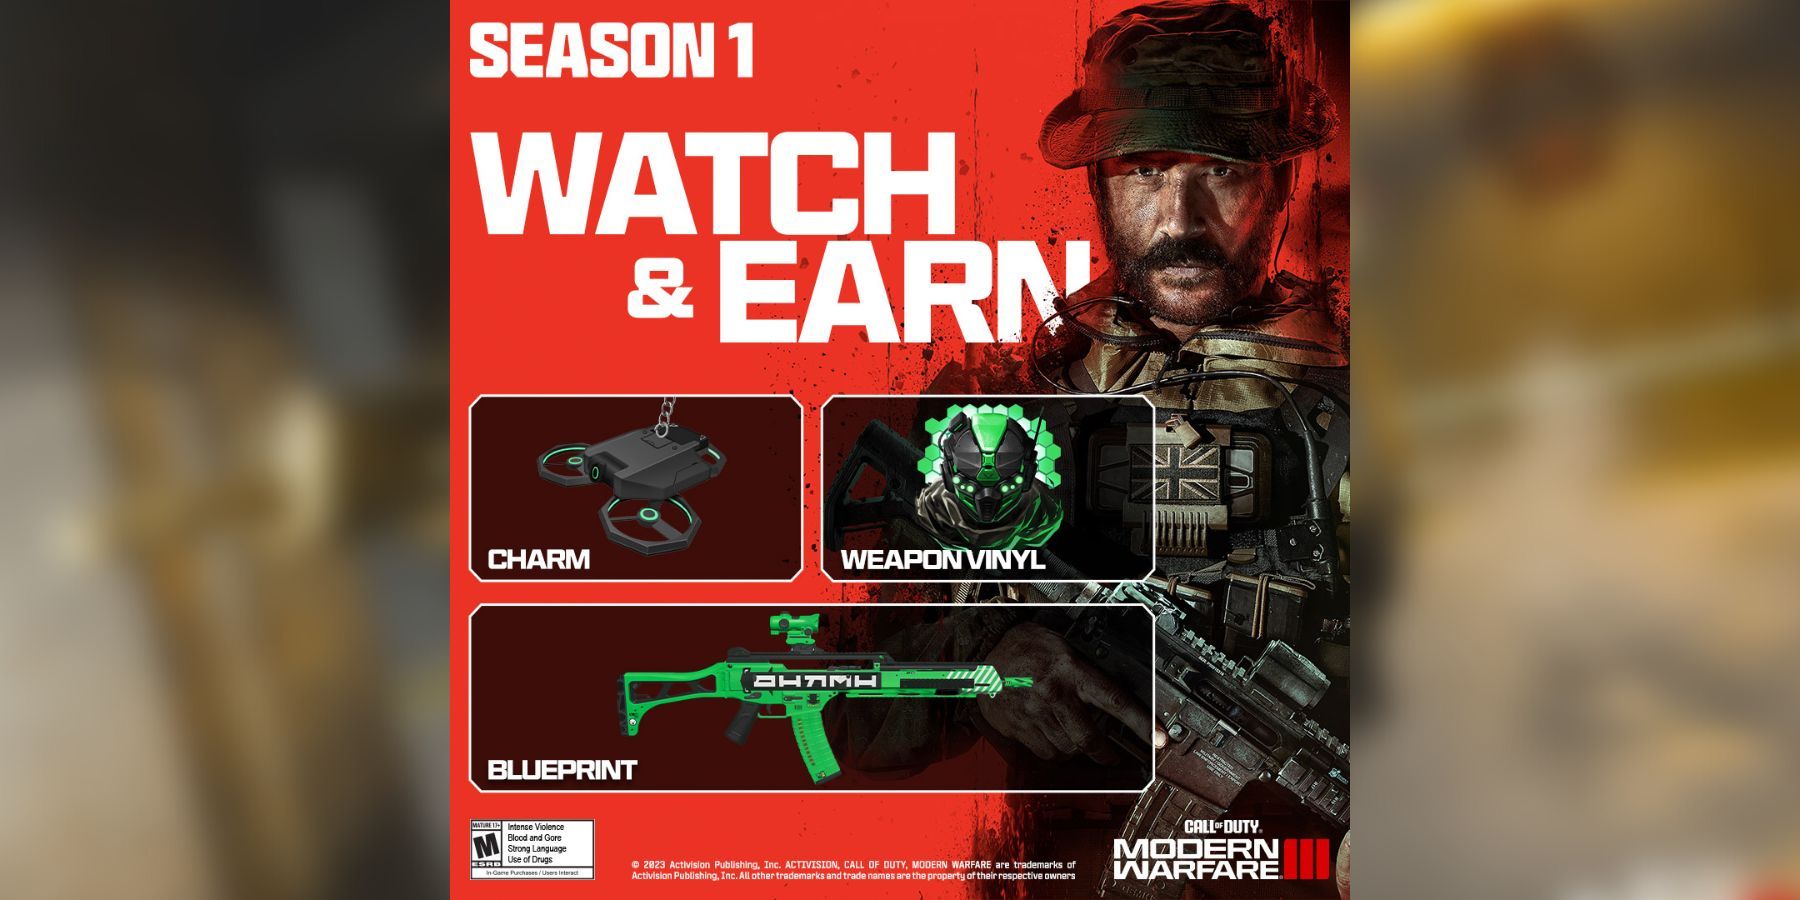 watch and earn reward lit for modern warfare 3 twitch drops.